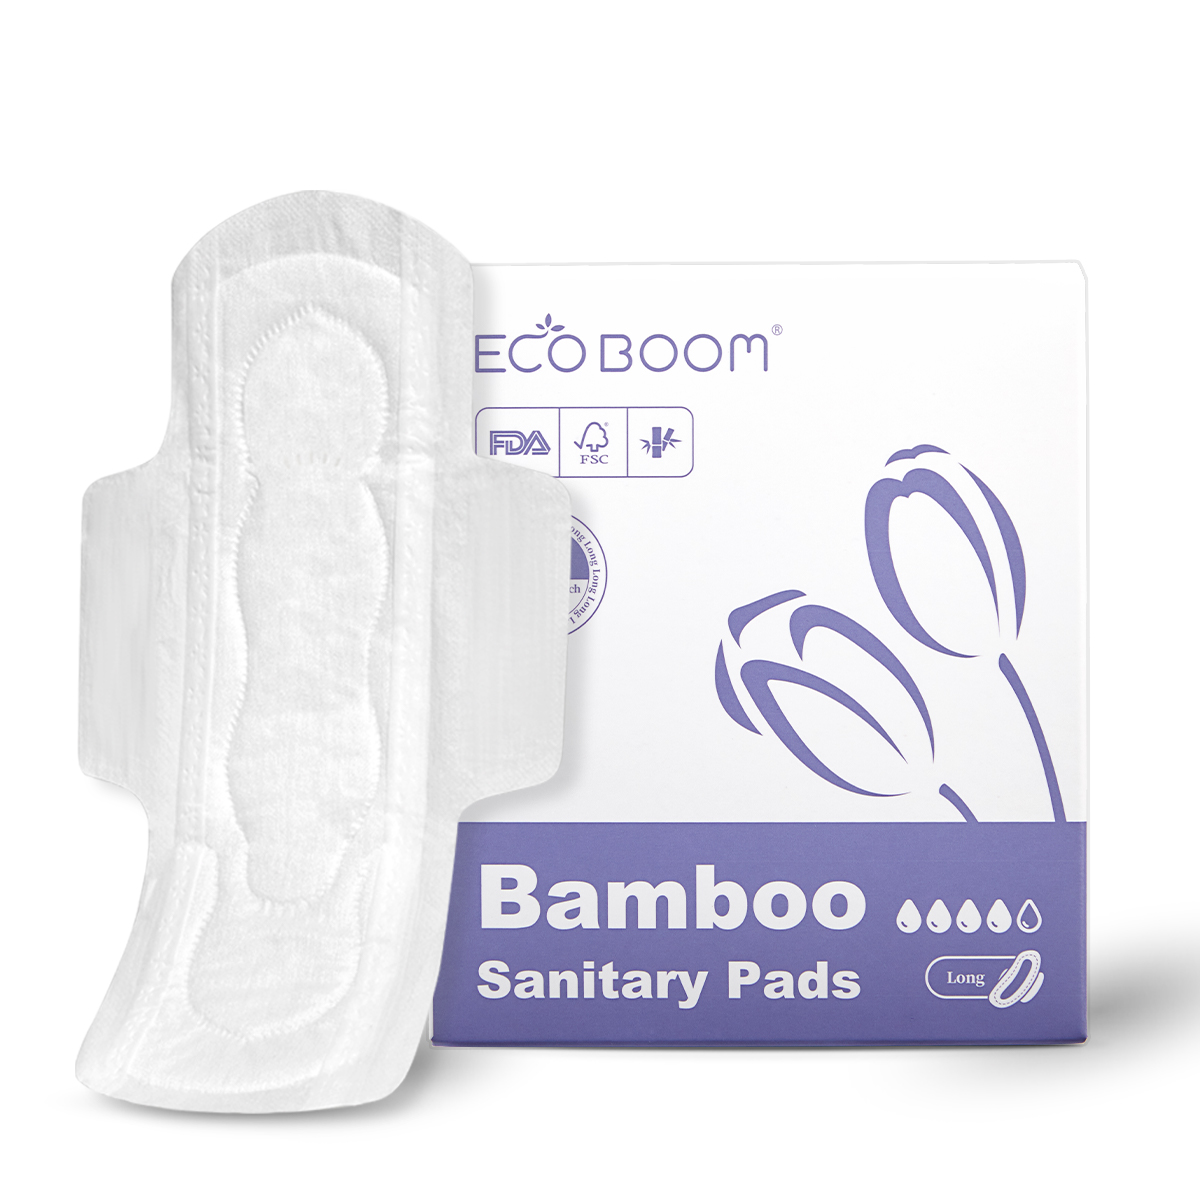 ECO BOOM bamboo menstrual pads wholesale distributors-1